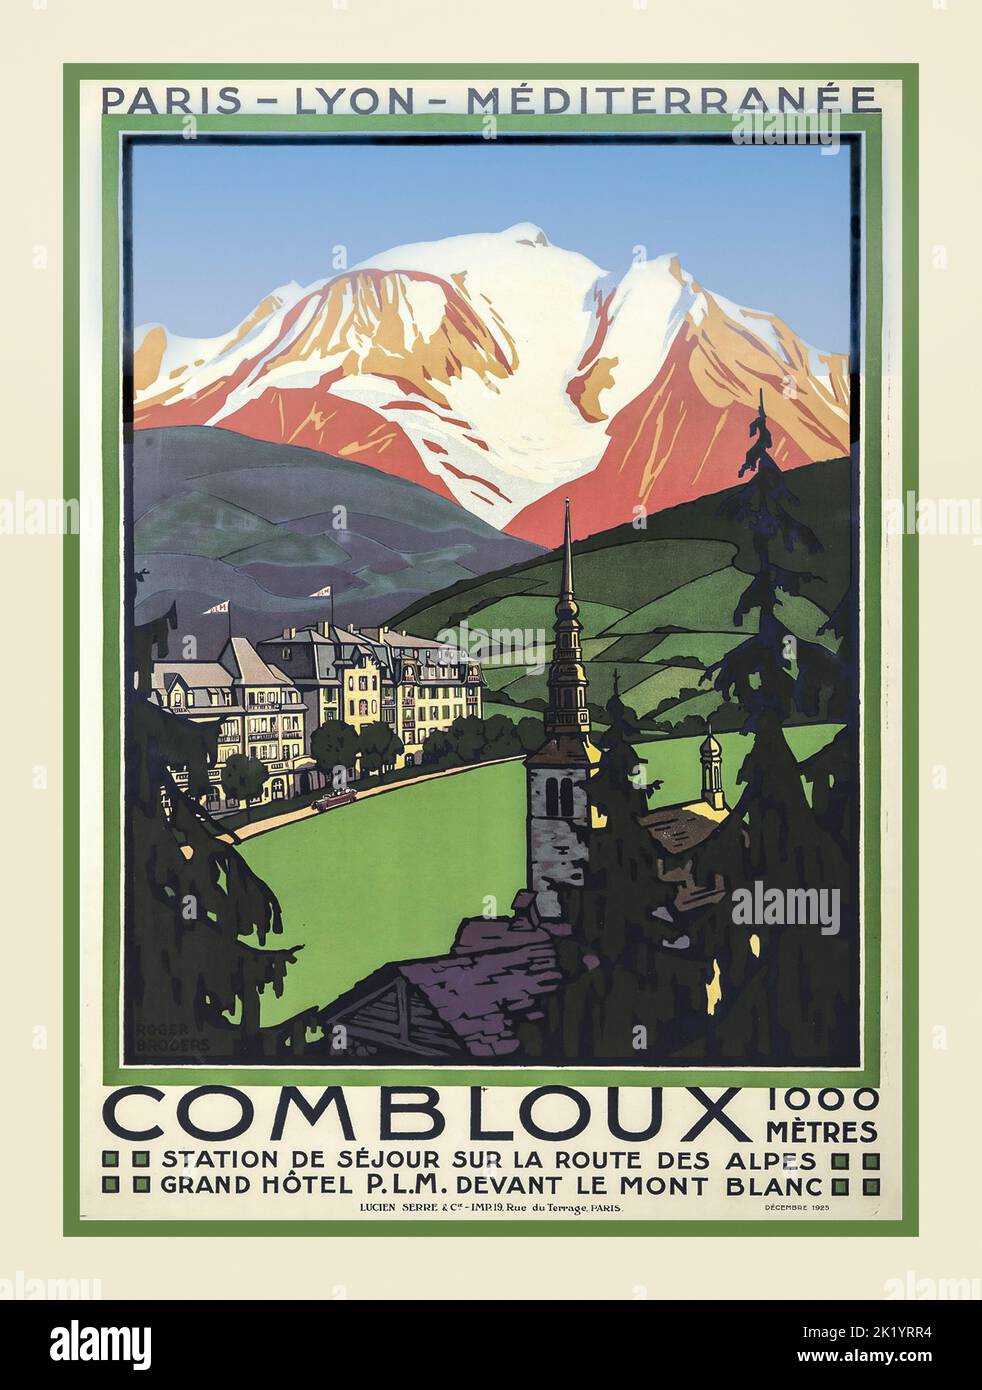 Vintage Travel Poster 1900s „COMBLOUX“ PLM französisches Rail Poster. Grand Hotel PLM Devant Le Mont Blanc Route des Alpes auf 1000 Meter Französisch Frankreich Stockfoto